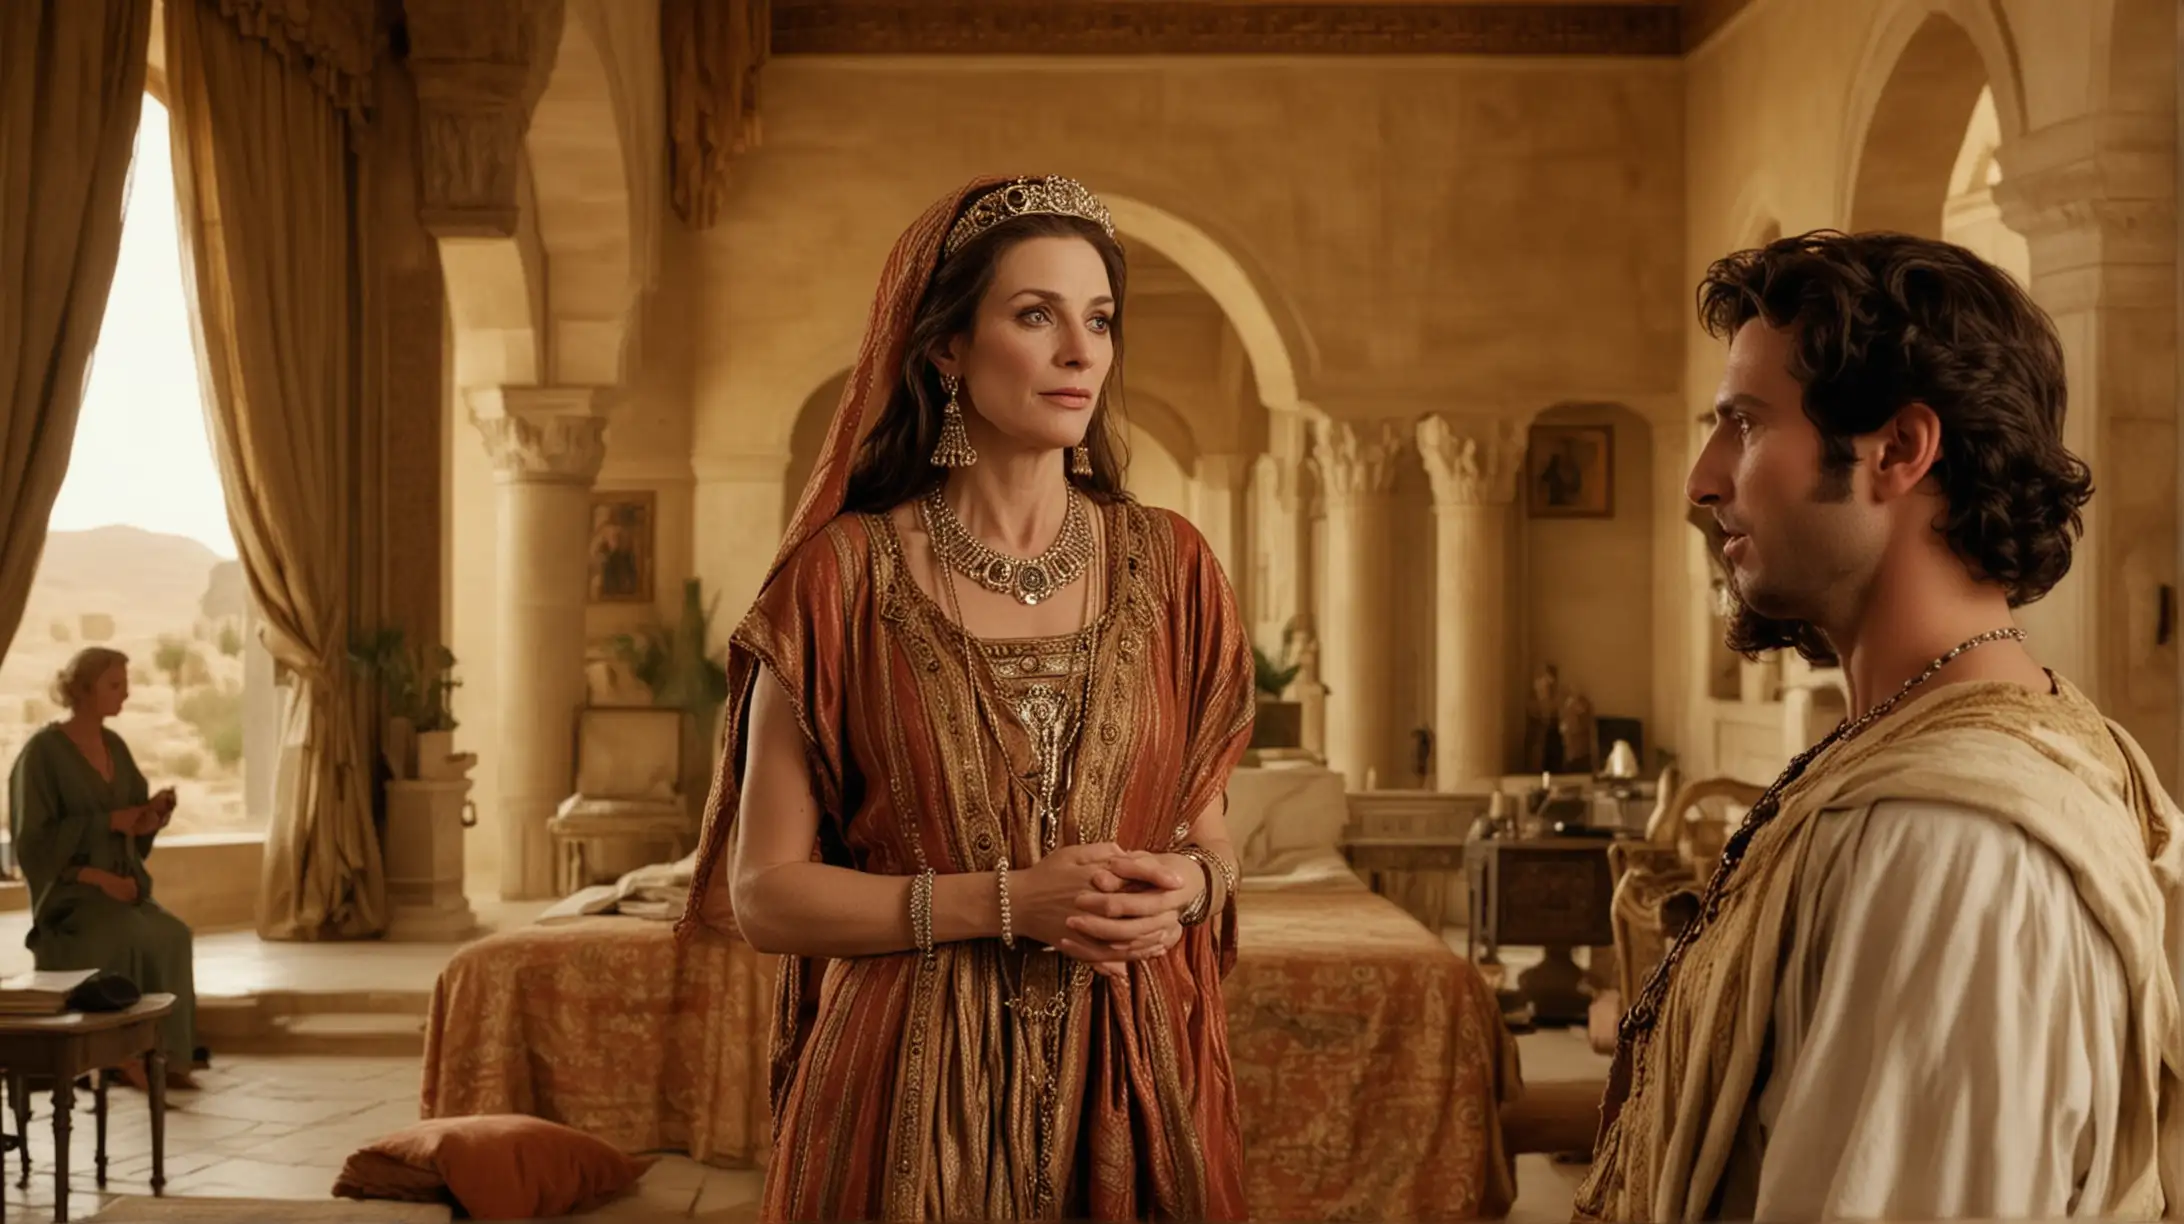 Beautiful Woman Converses with King David in Desert Palace Setting